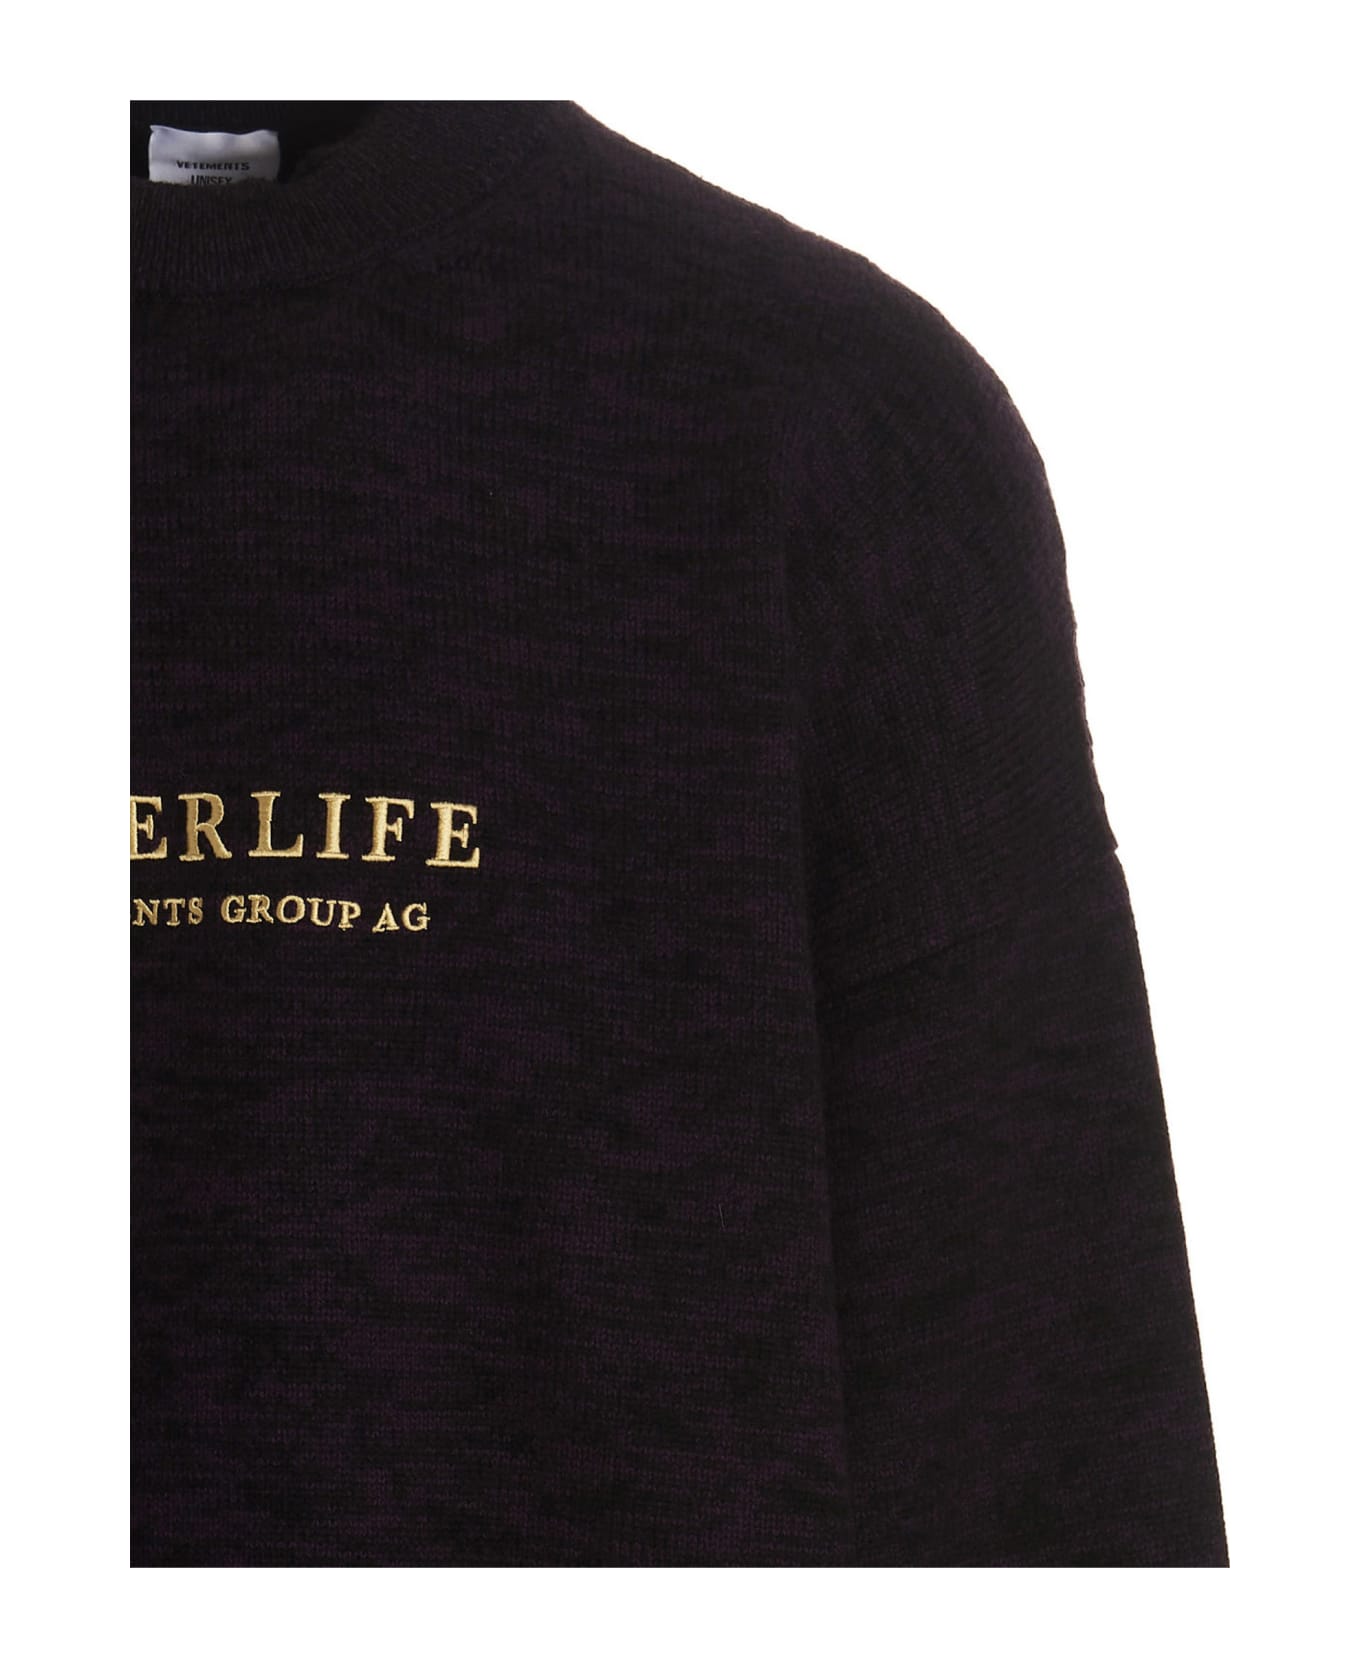 VETEMENTS 'afterlife' Sweater - Purple ウェア